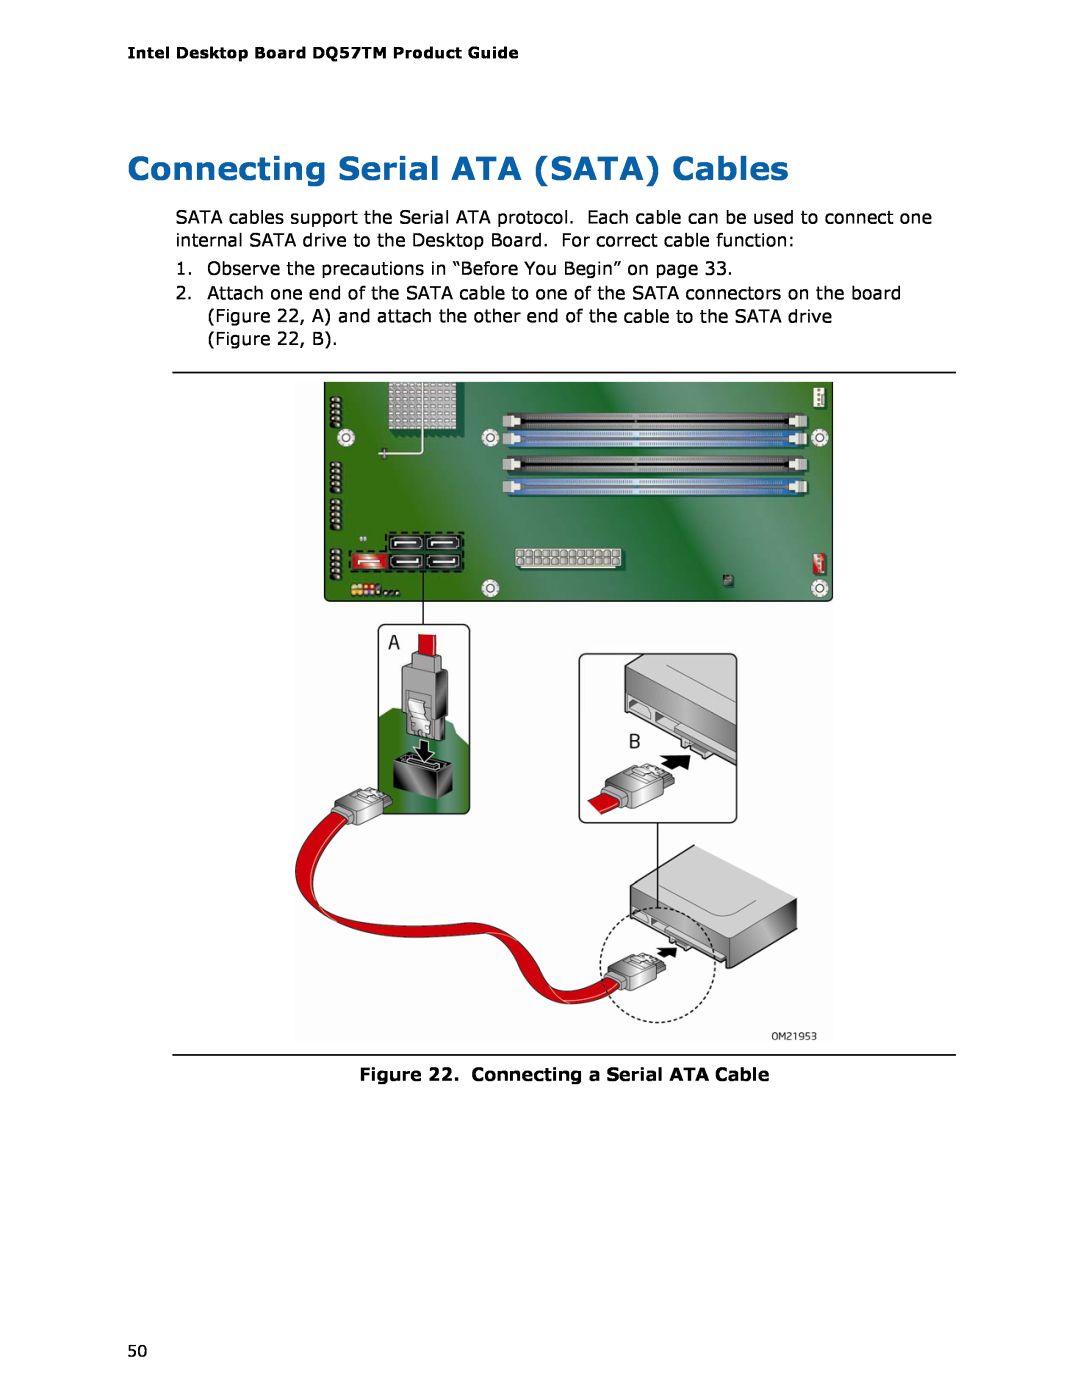 Intel DQ57TM manual Connecting Serial ATA SATA Cables, Connecting a Serial ATA Cable 